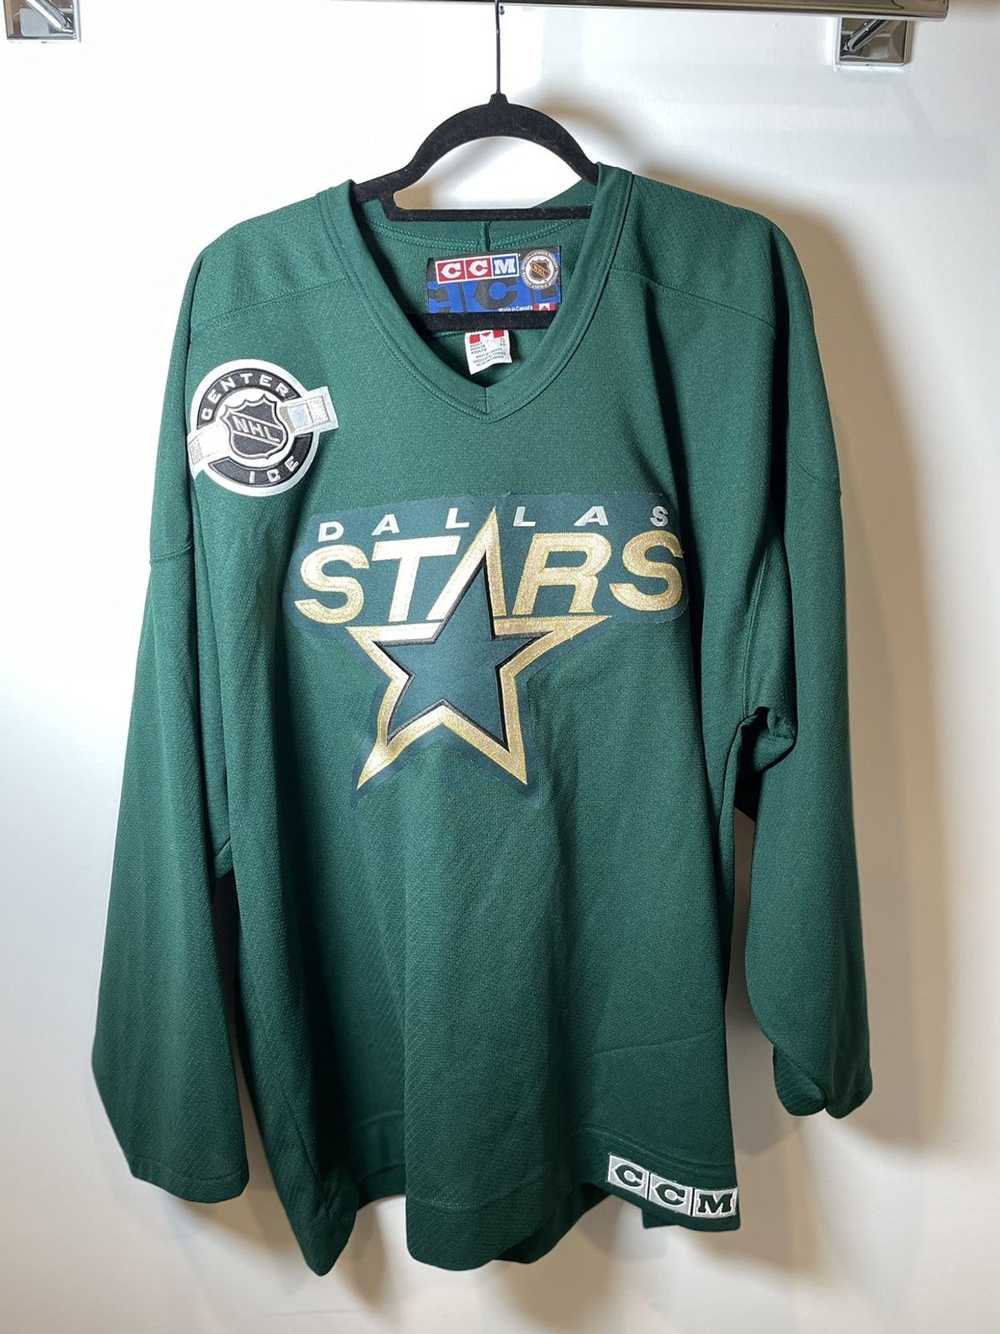 Authentic Vintage CCM NHL Dallas Stars Hockey Jersey